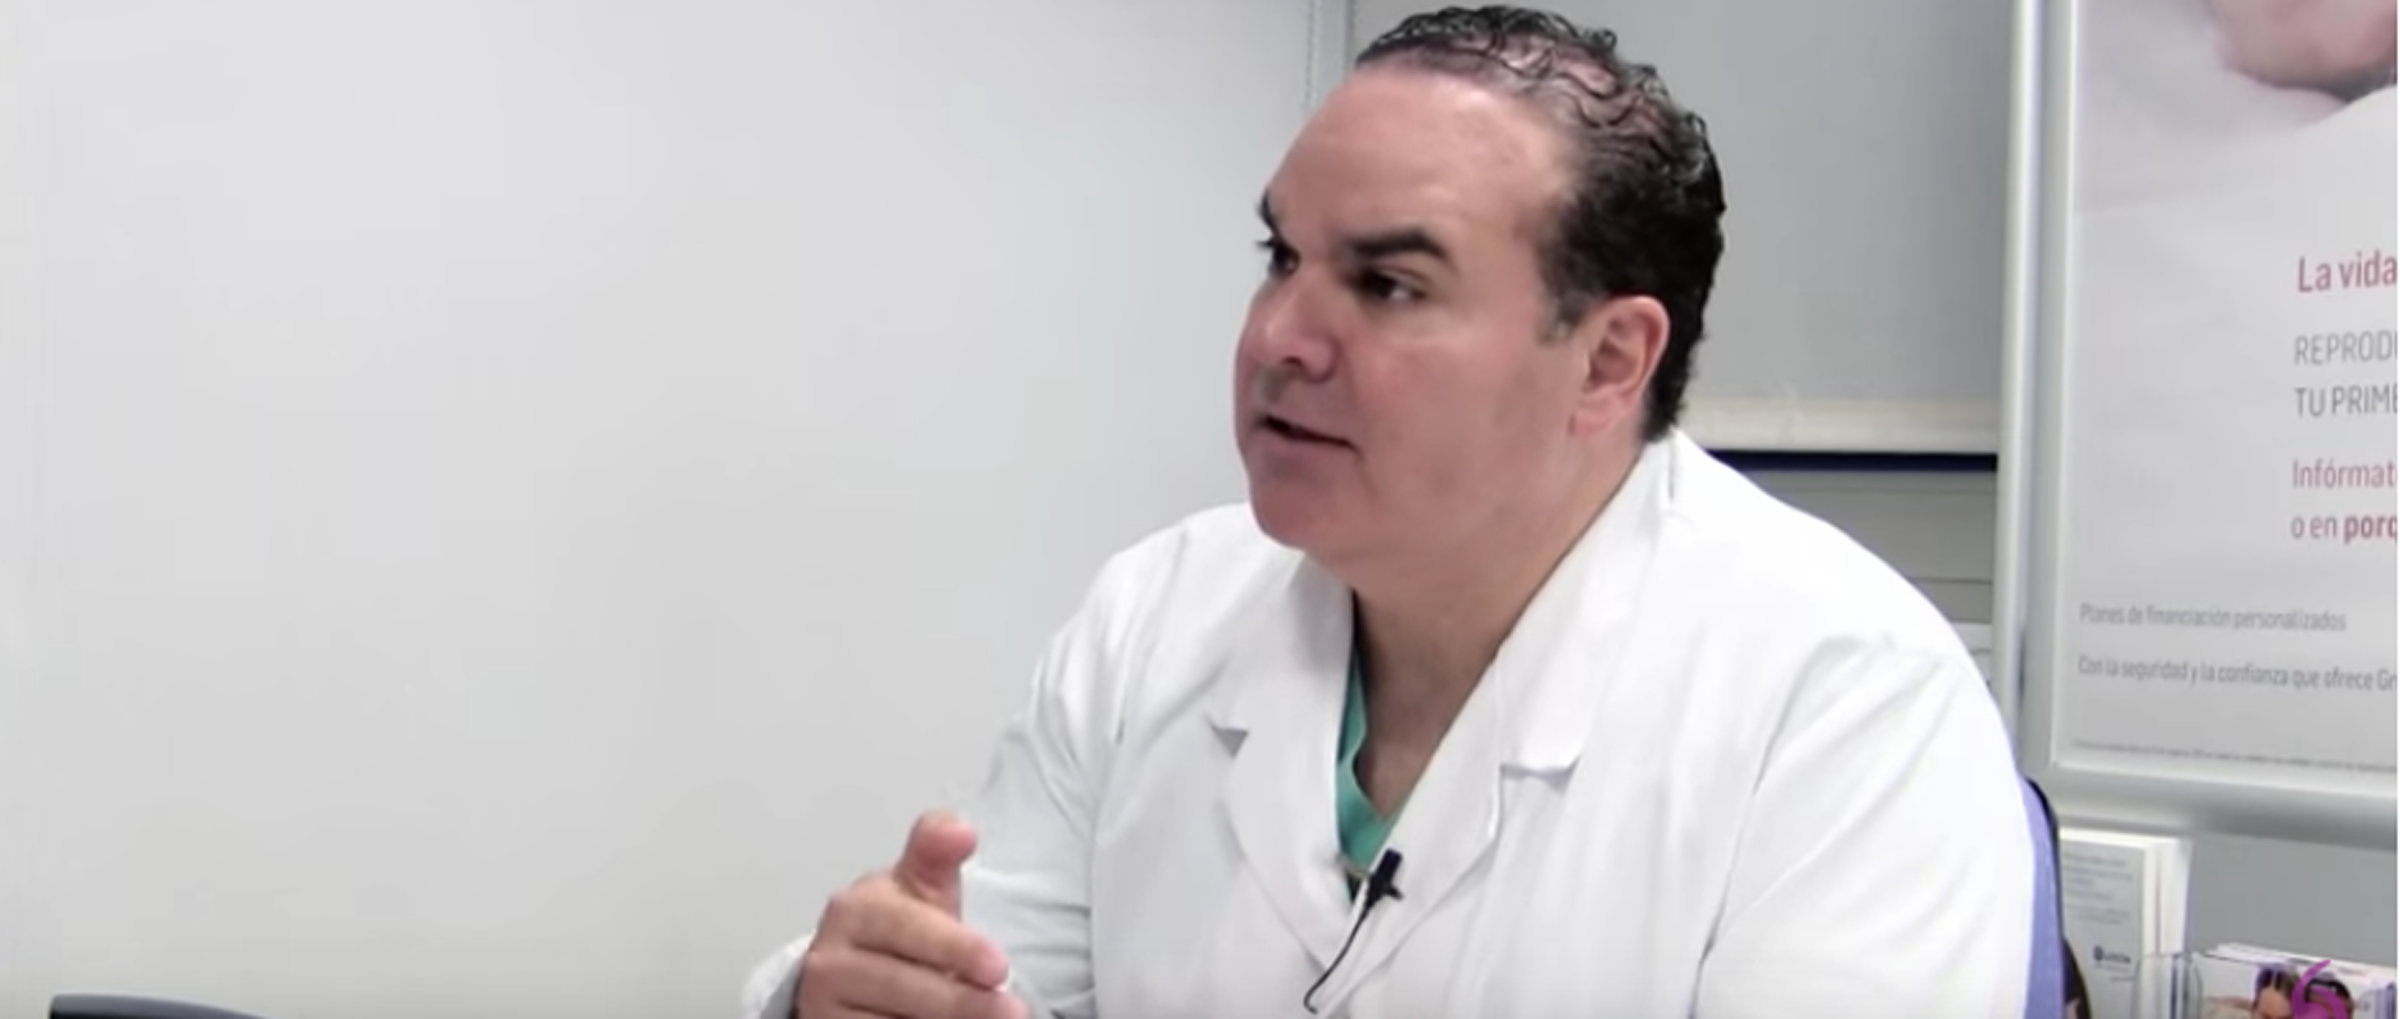 Dr. Victor Villalobos über assistierte Reproduktion in Spanien